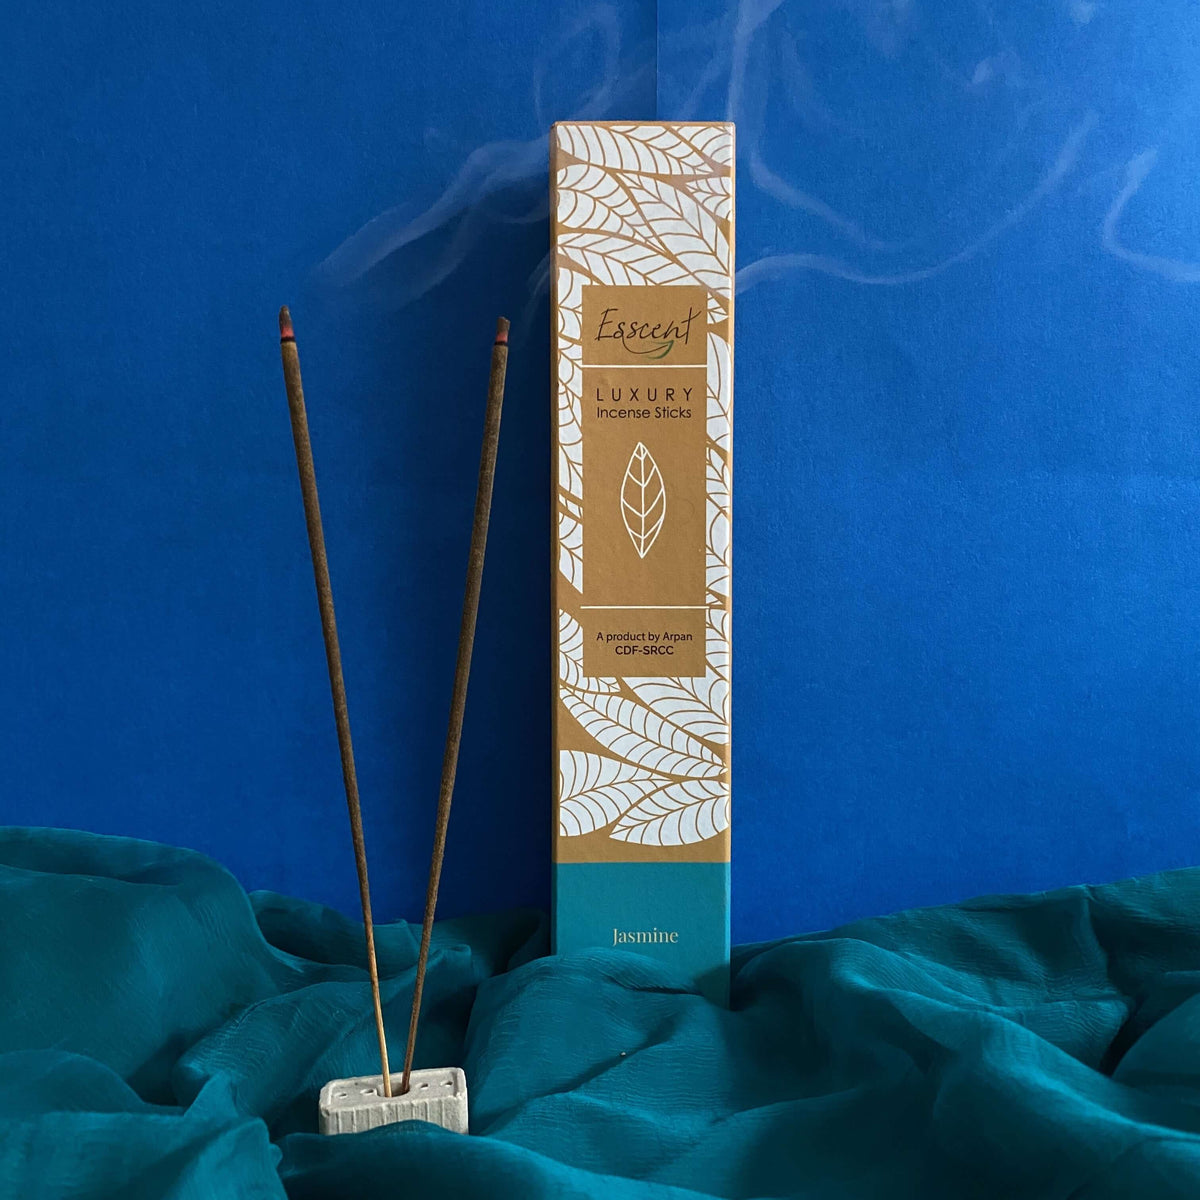 Jasmine Premium Flower-based Incense Sticks